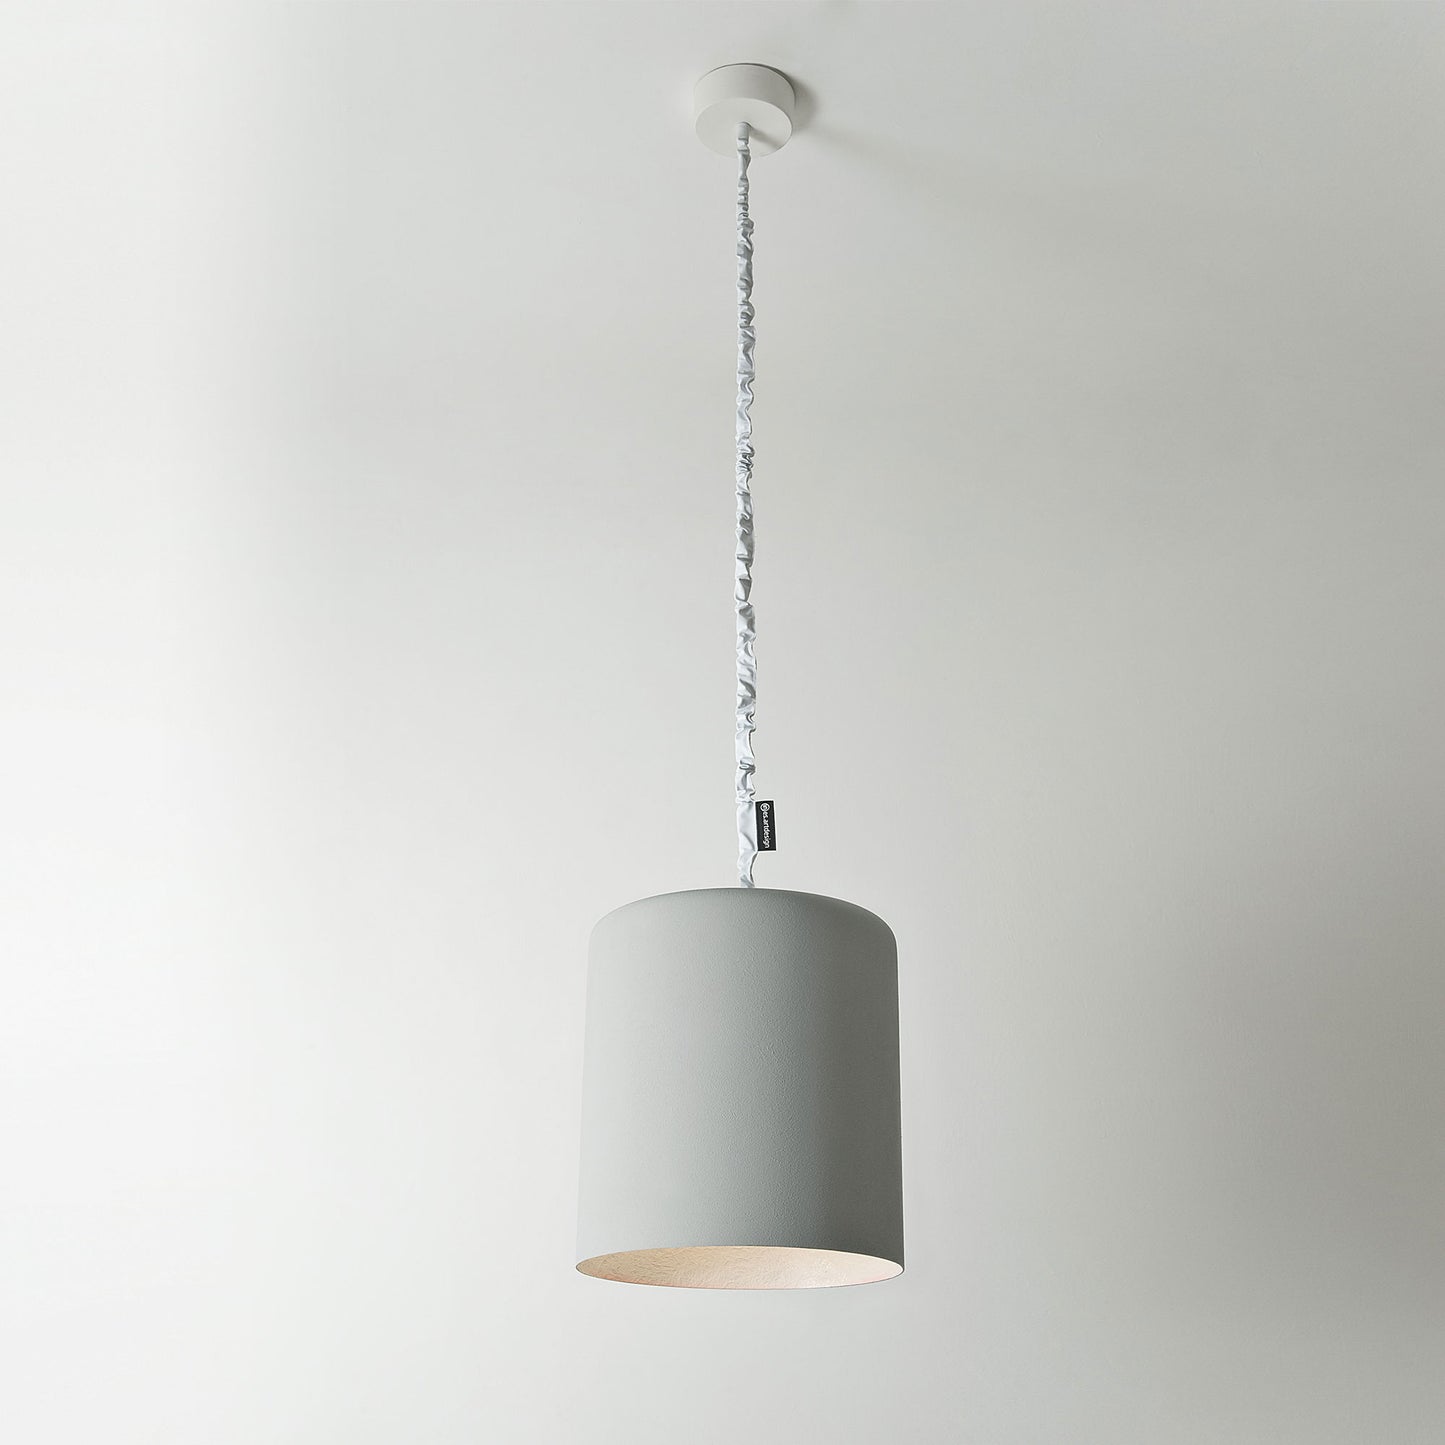 In-Es Art Design Bin Cemento Pendant Light